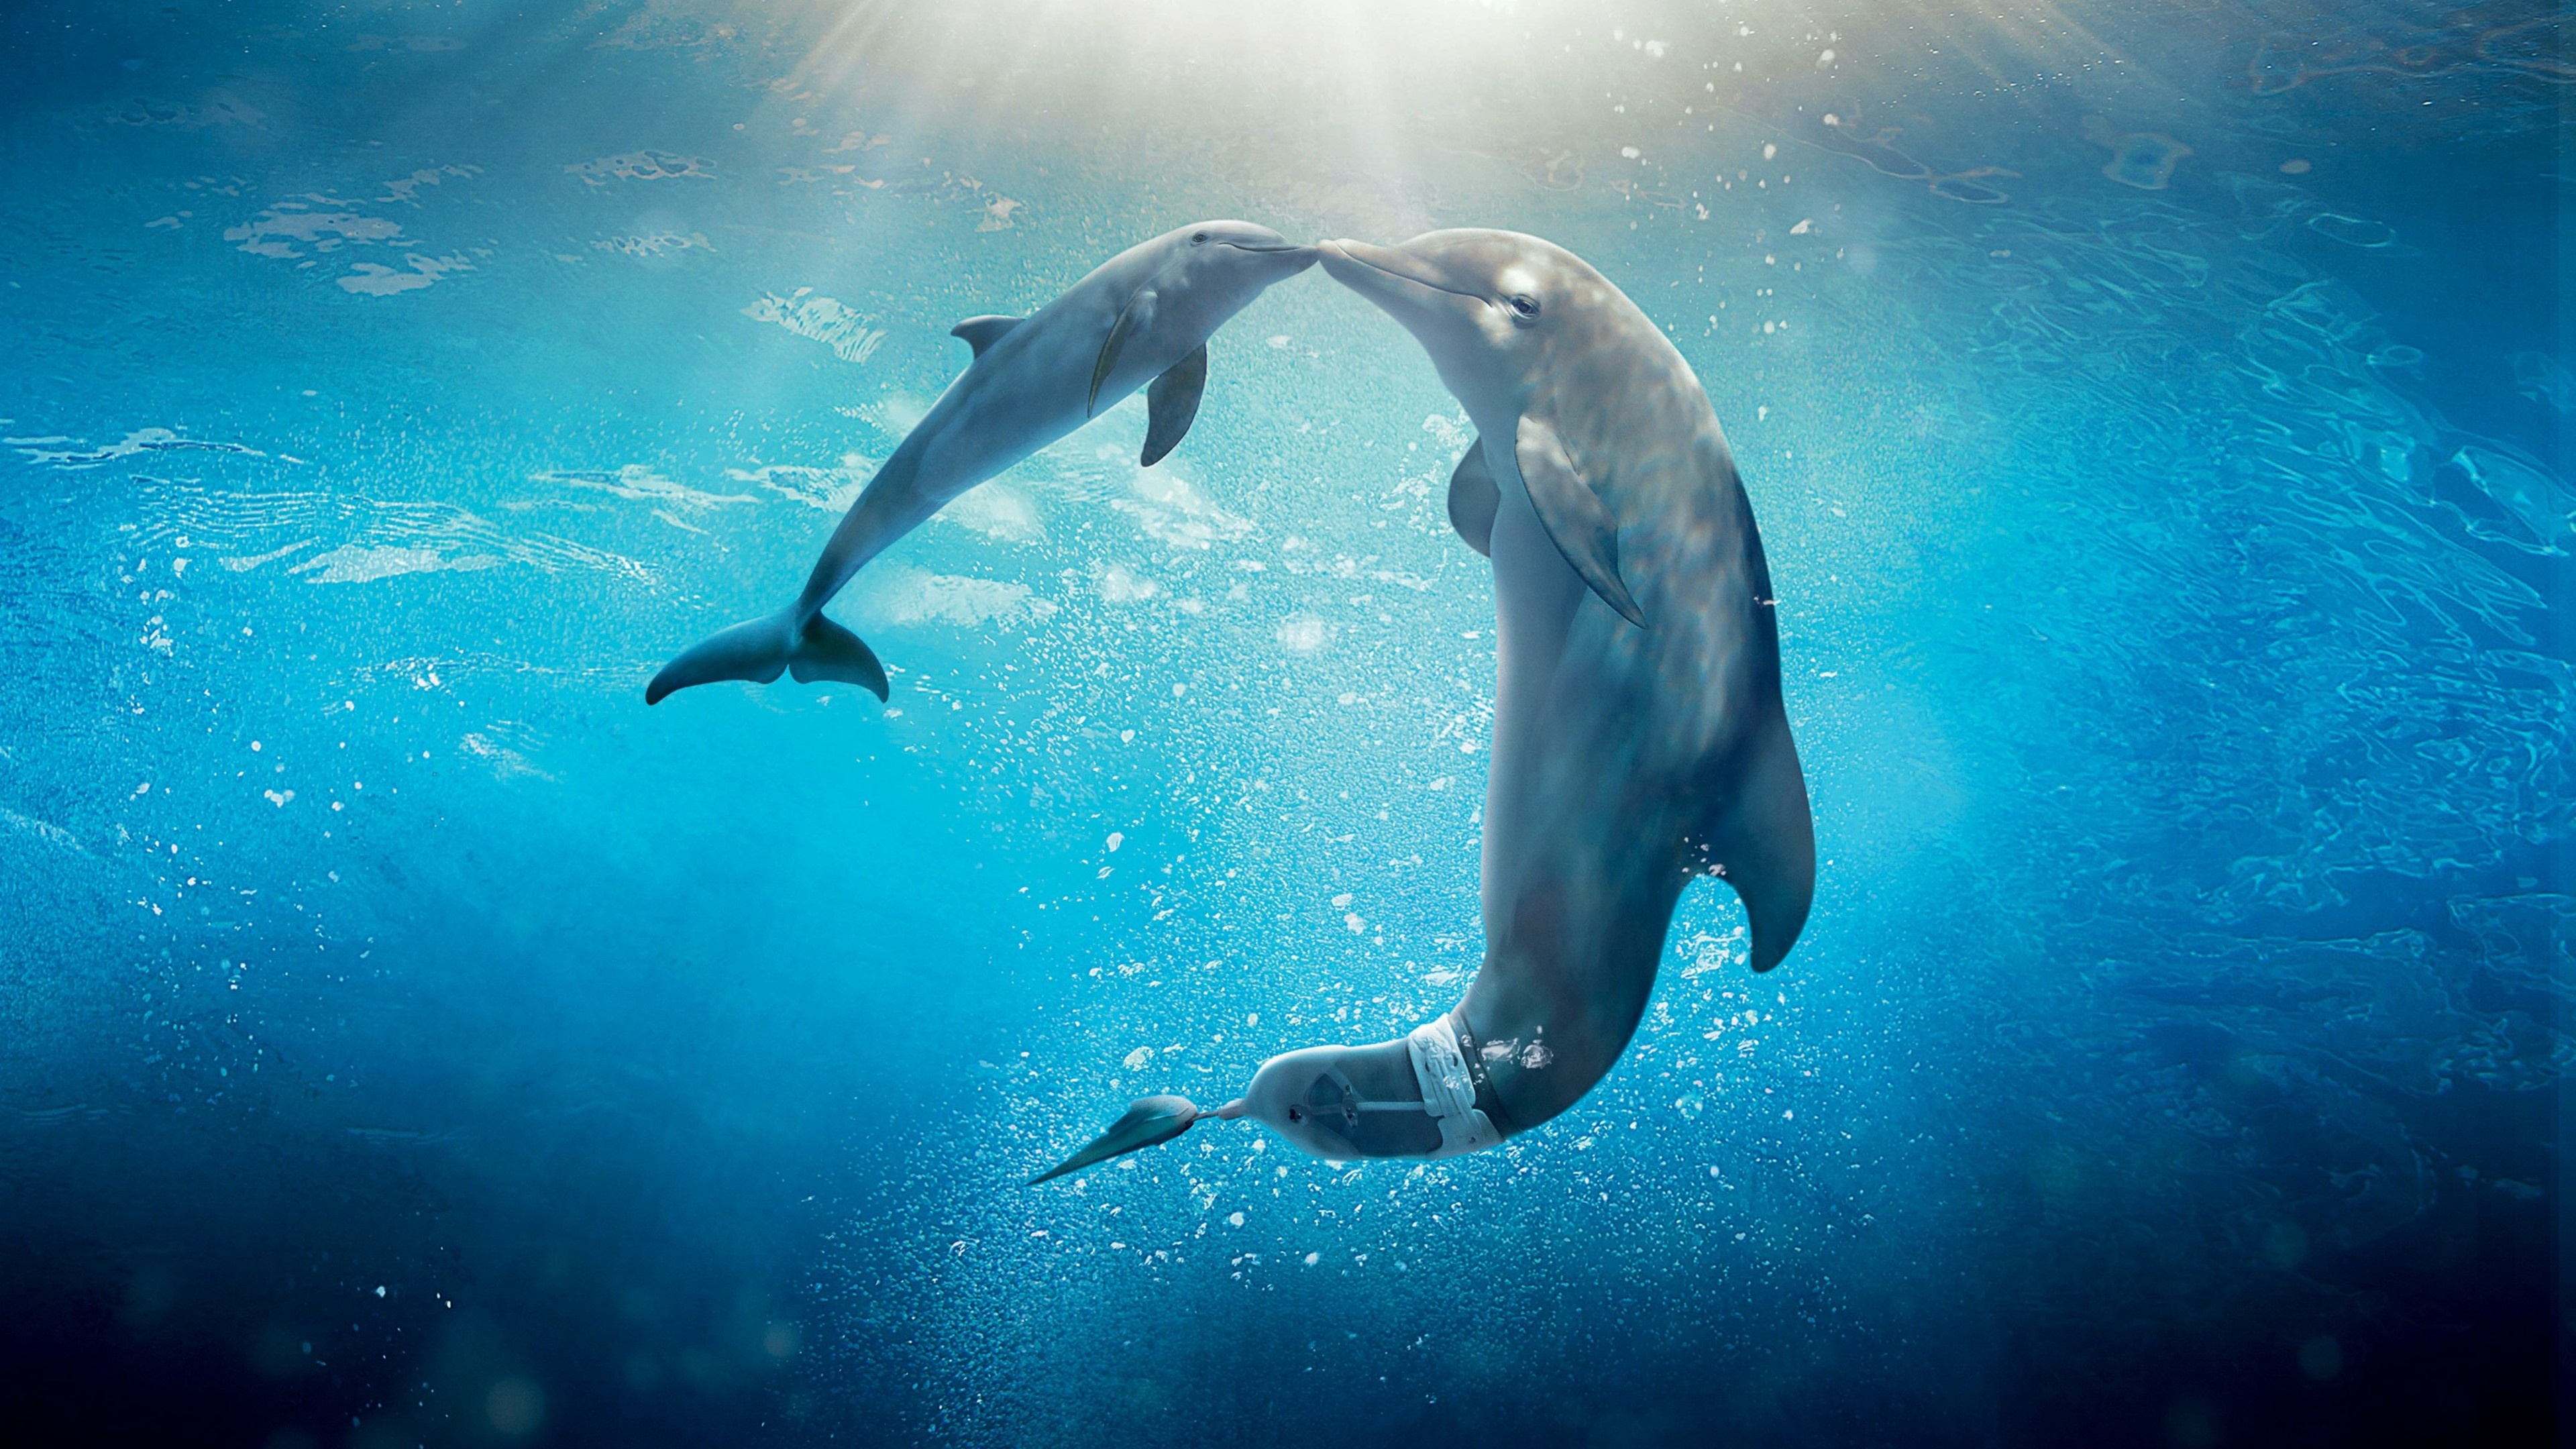 Dolphin Tale 2 movie wallpapers, Aquatic adventures, Heartwarming family films, Dolphin tale sequel, 3840x2160 4K Desktop